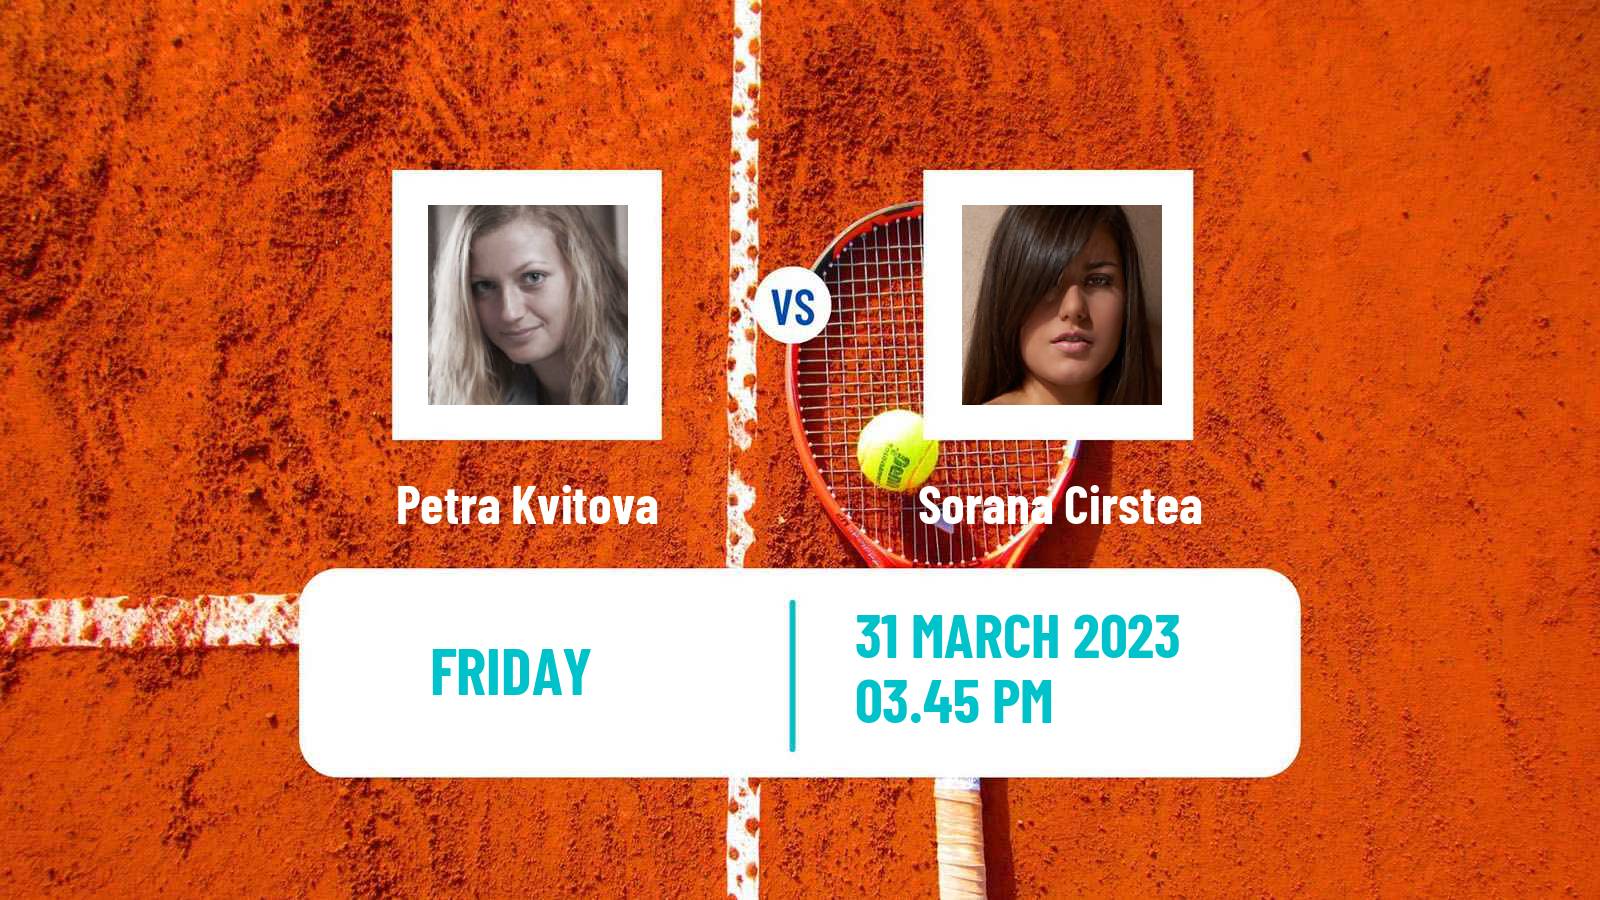 Tennis WTA Miami Petra Kvitova - Sorana Cirstea